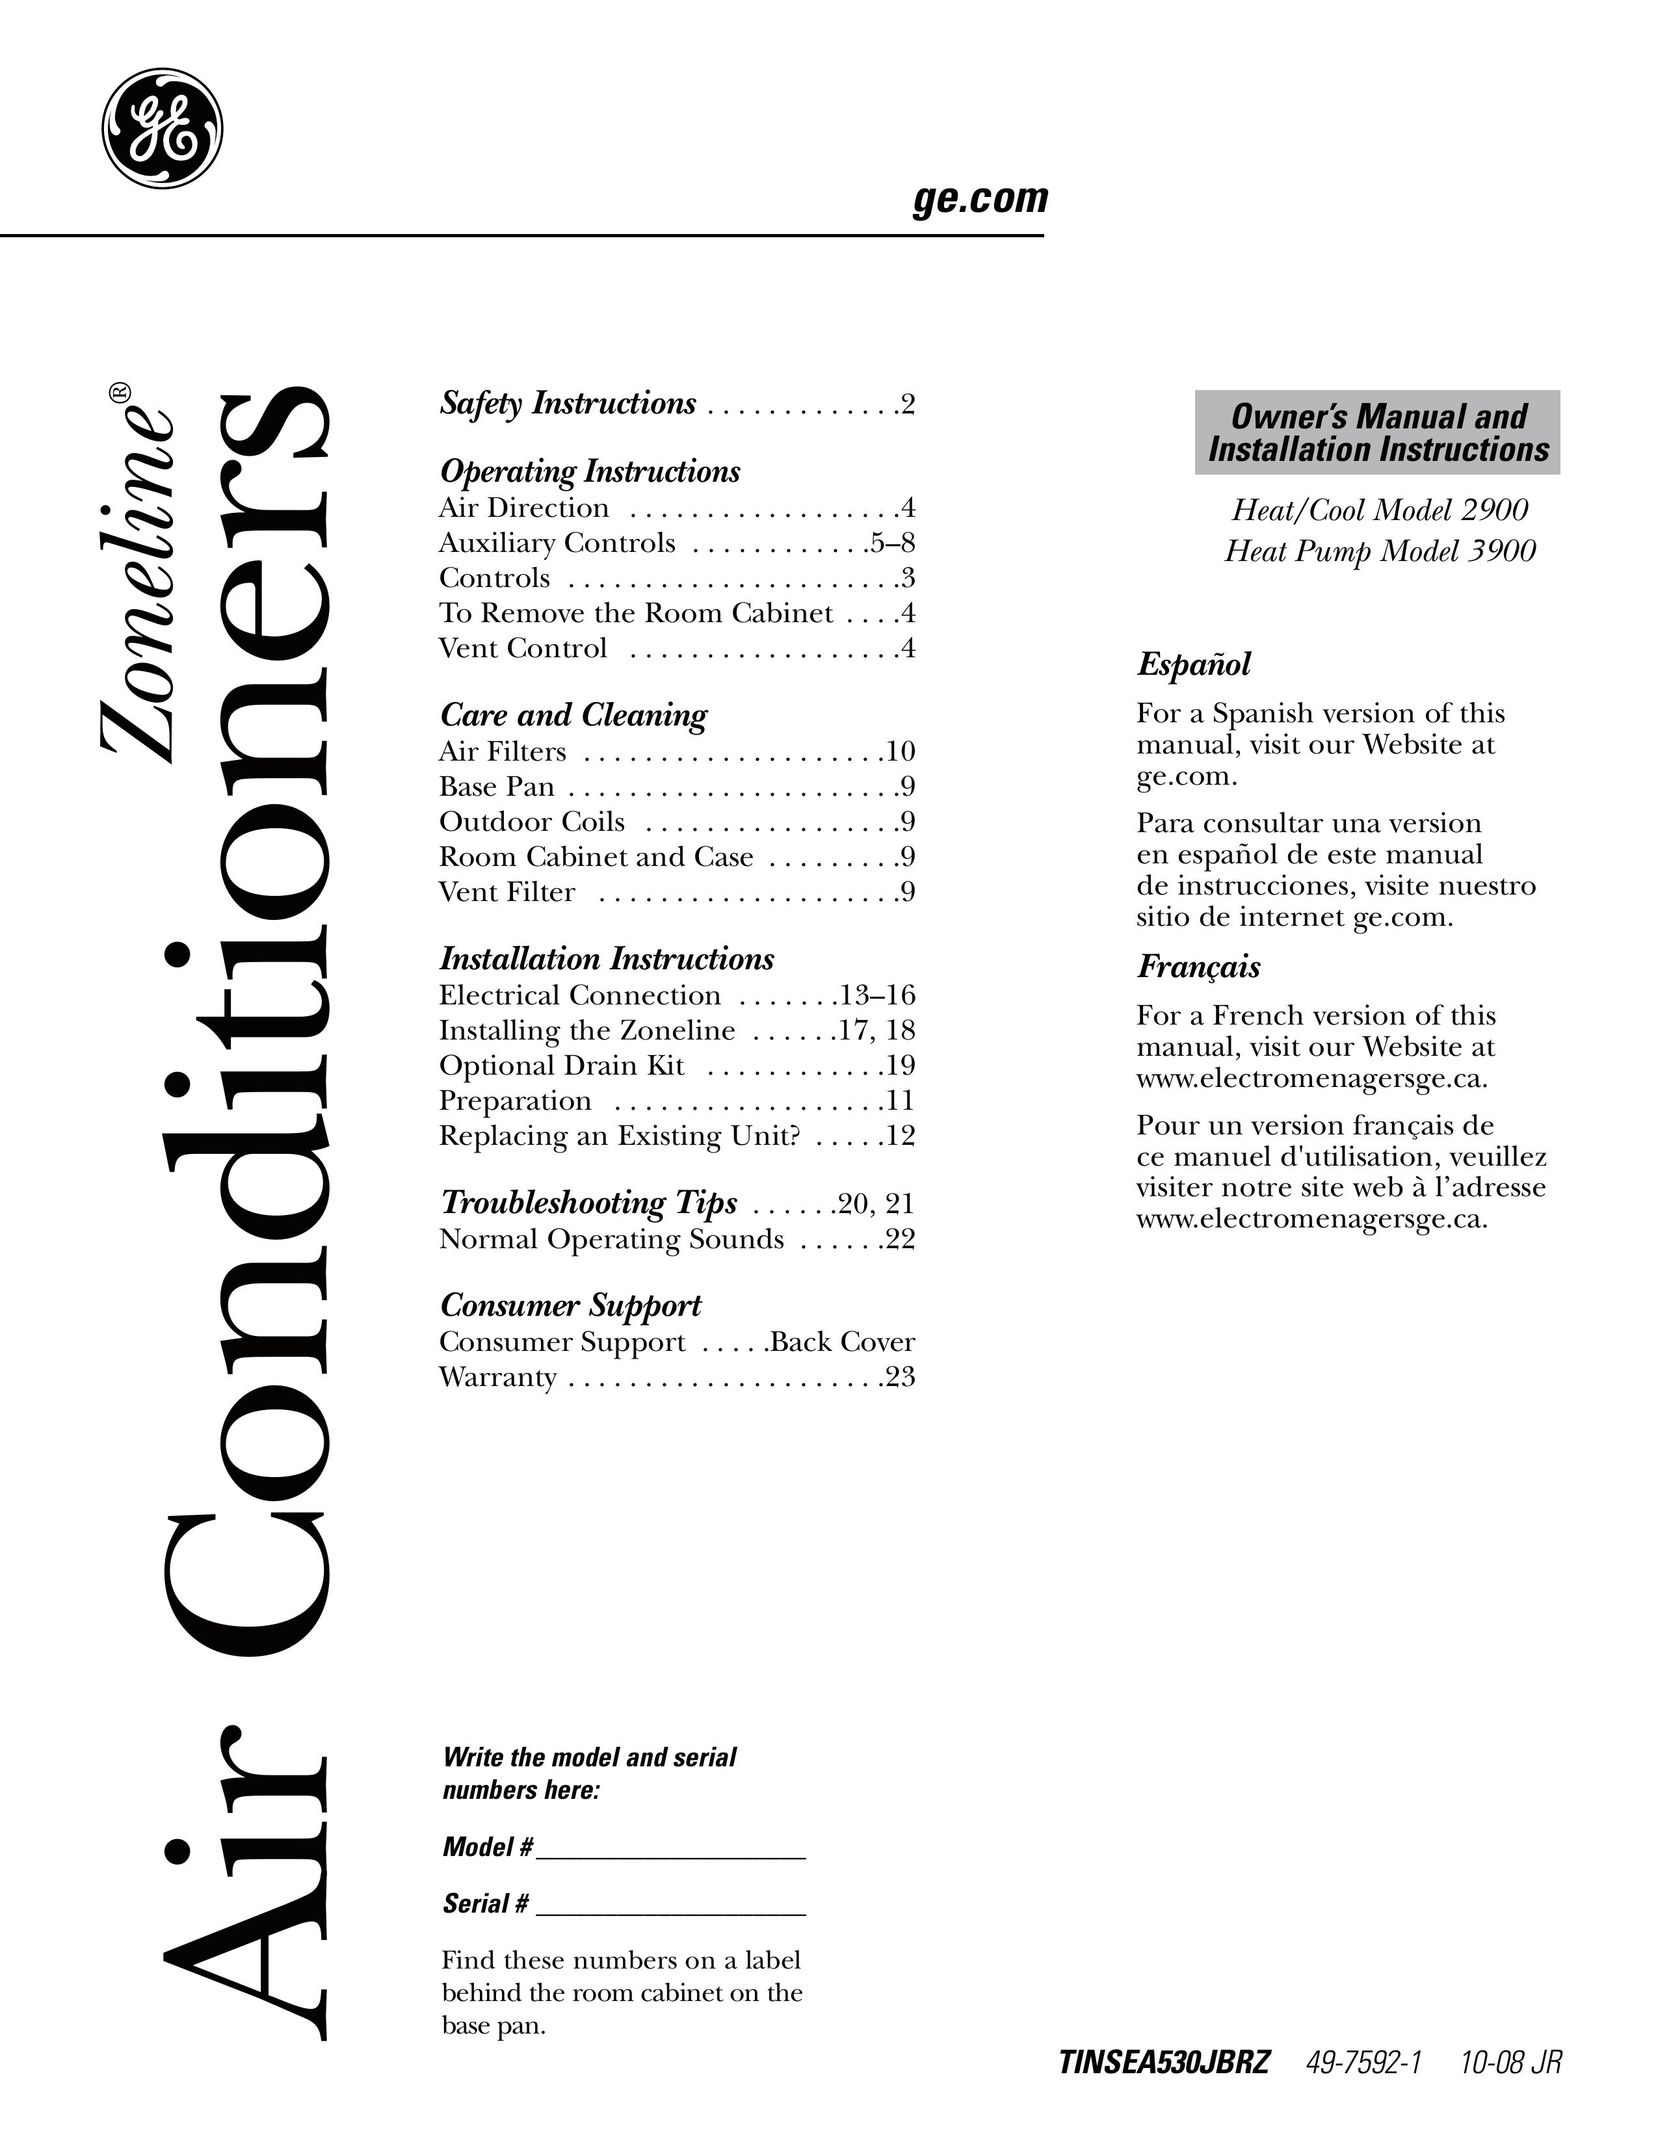 GE 2900 Air Conditioner User Manual